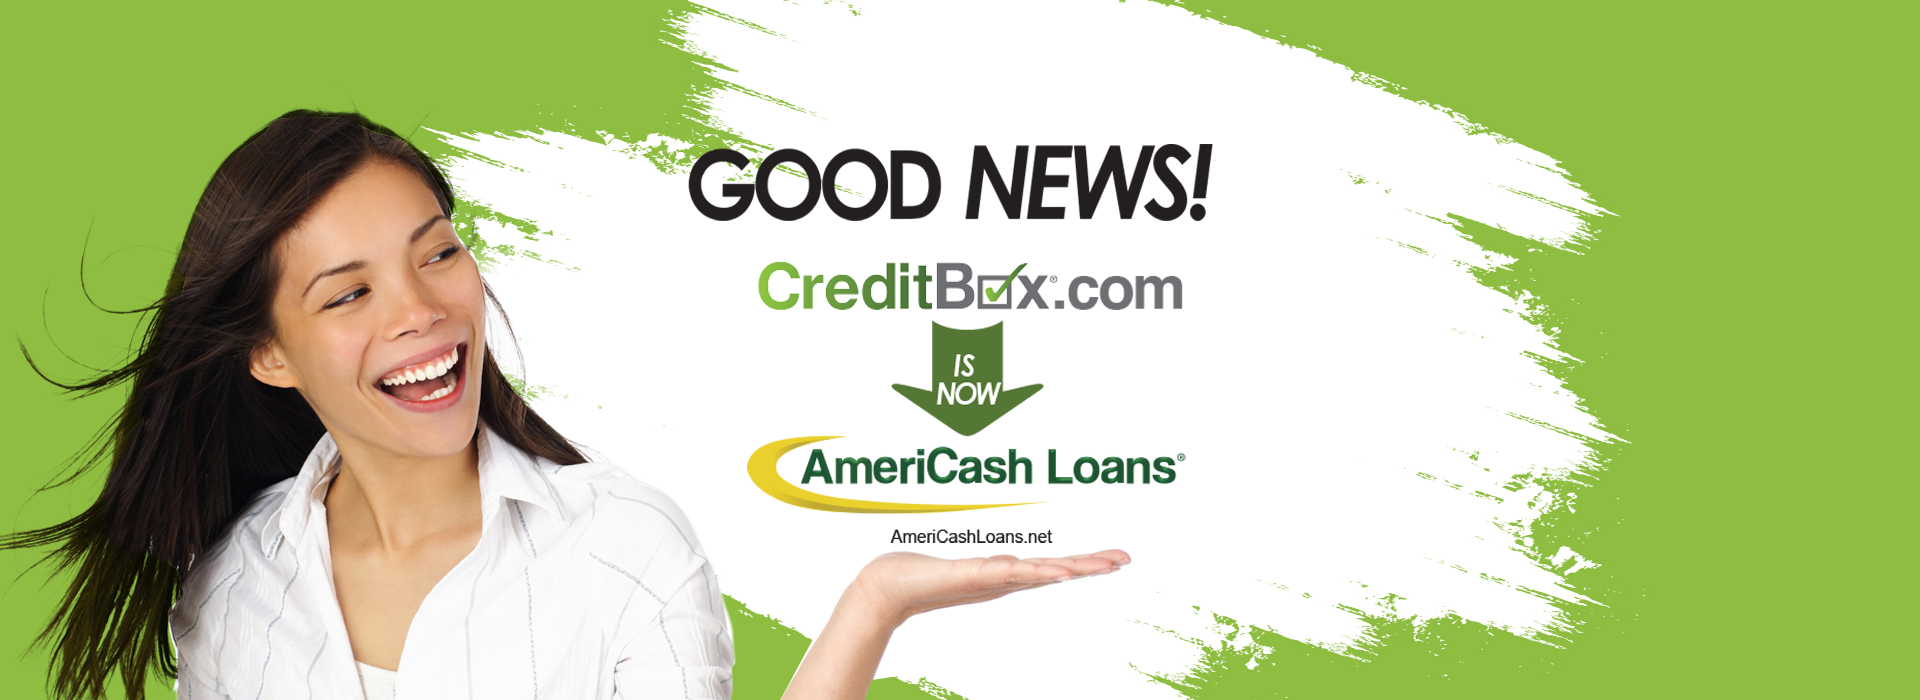 Good News CreditBox.com Is Now AmeriCash Loans